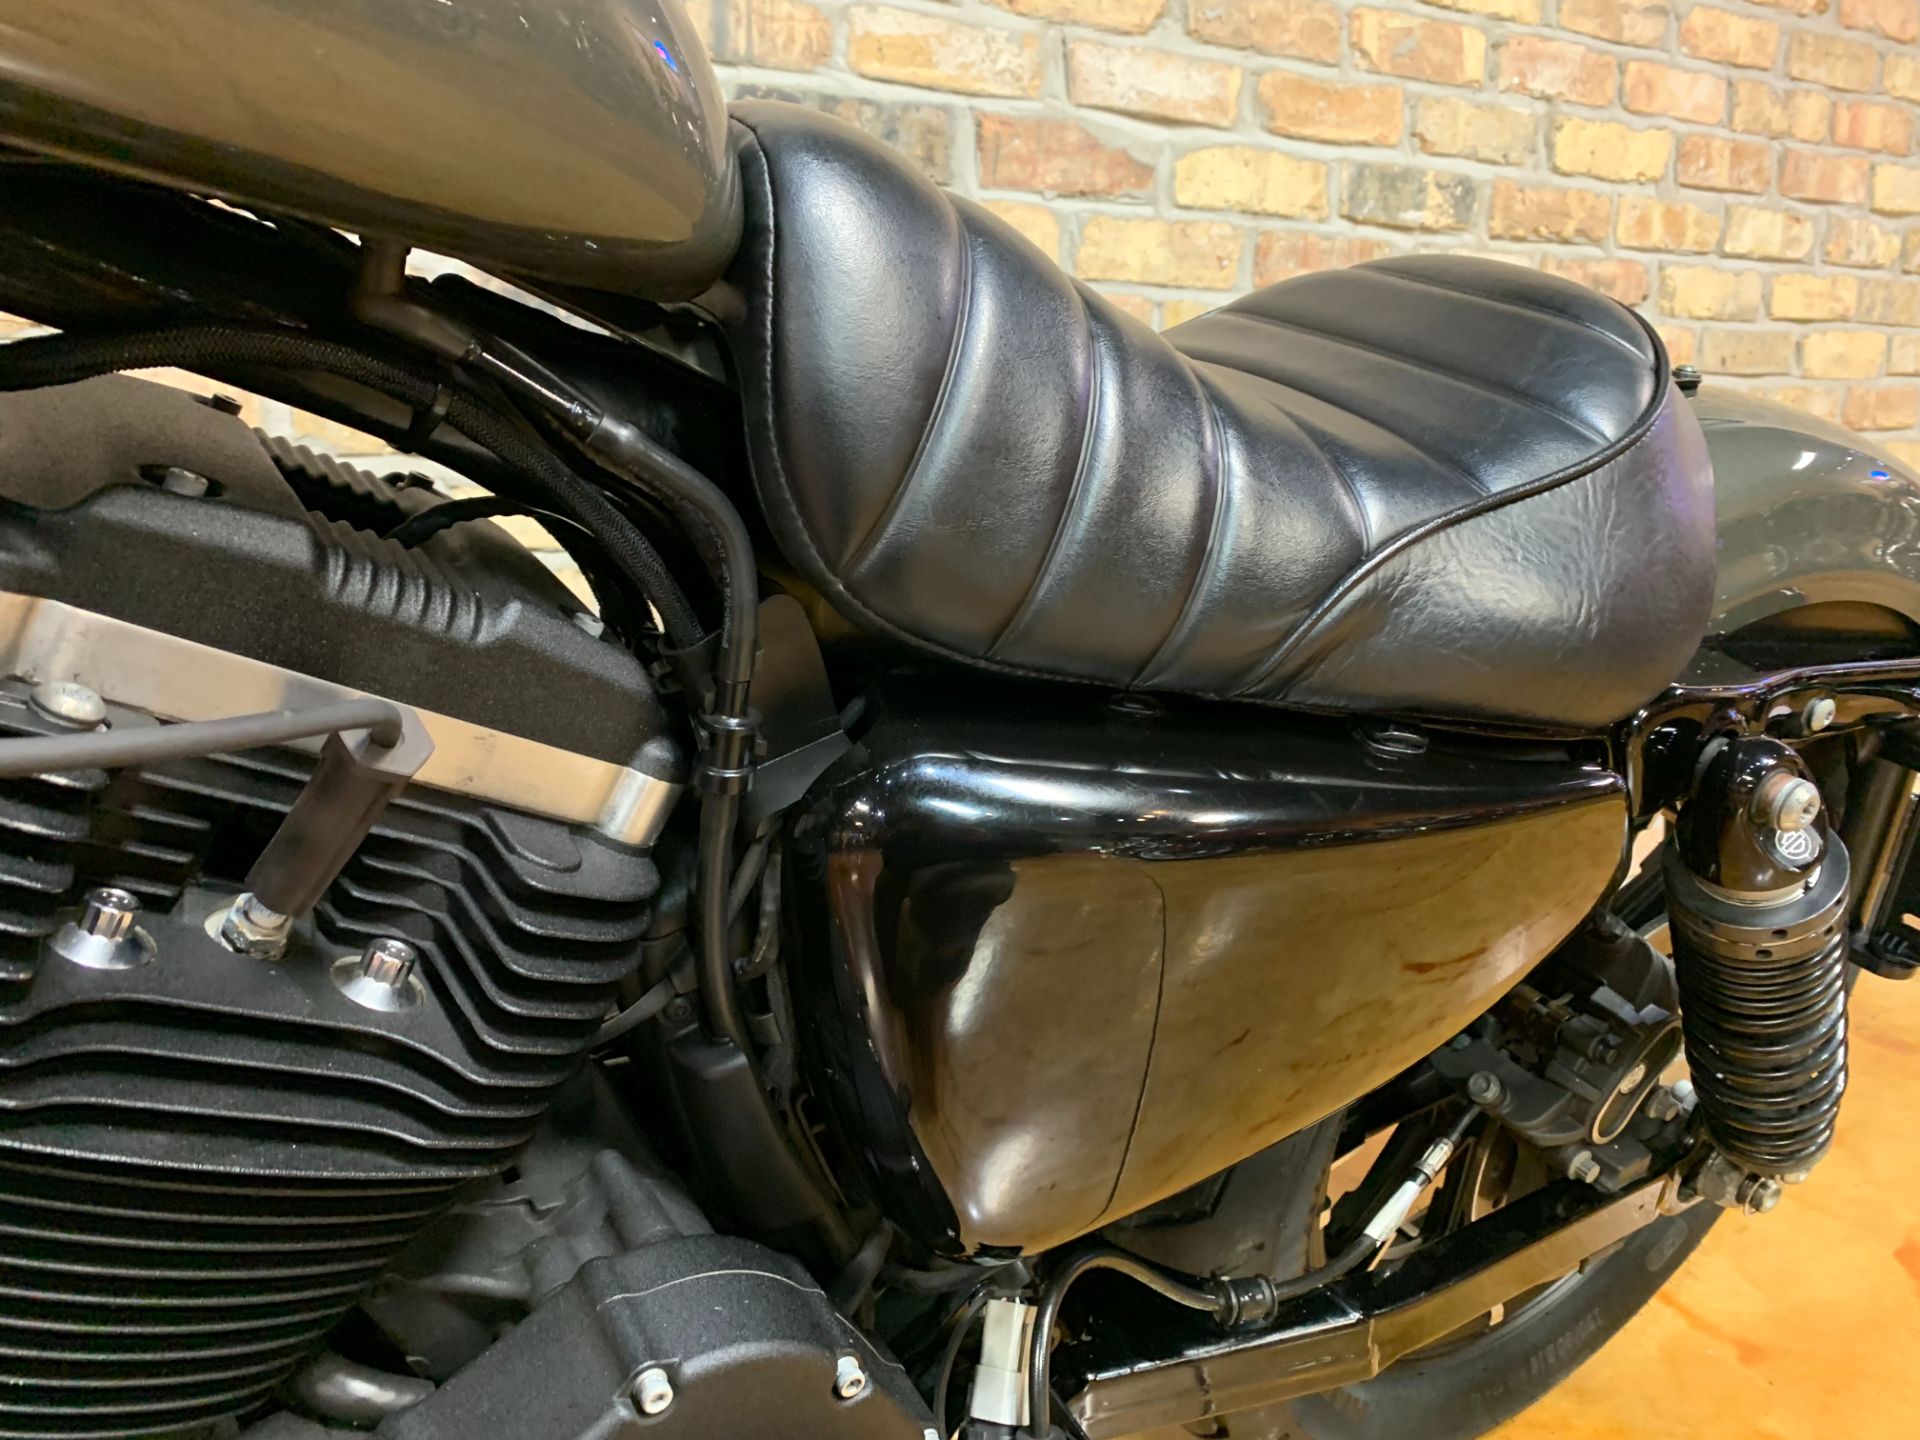 2019 Harley-Davidson Iron 883™ in Big Bend, Wisconsin - Photo 23